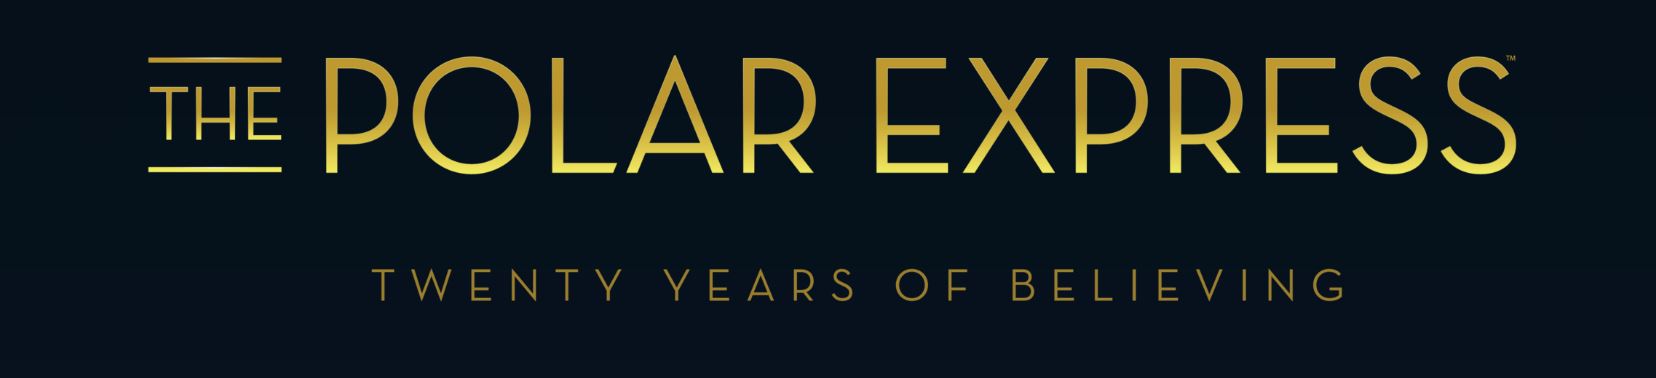 The Polar Express 20th Anniversary